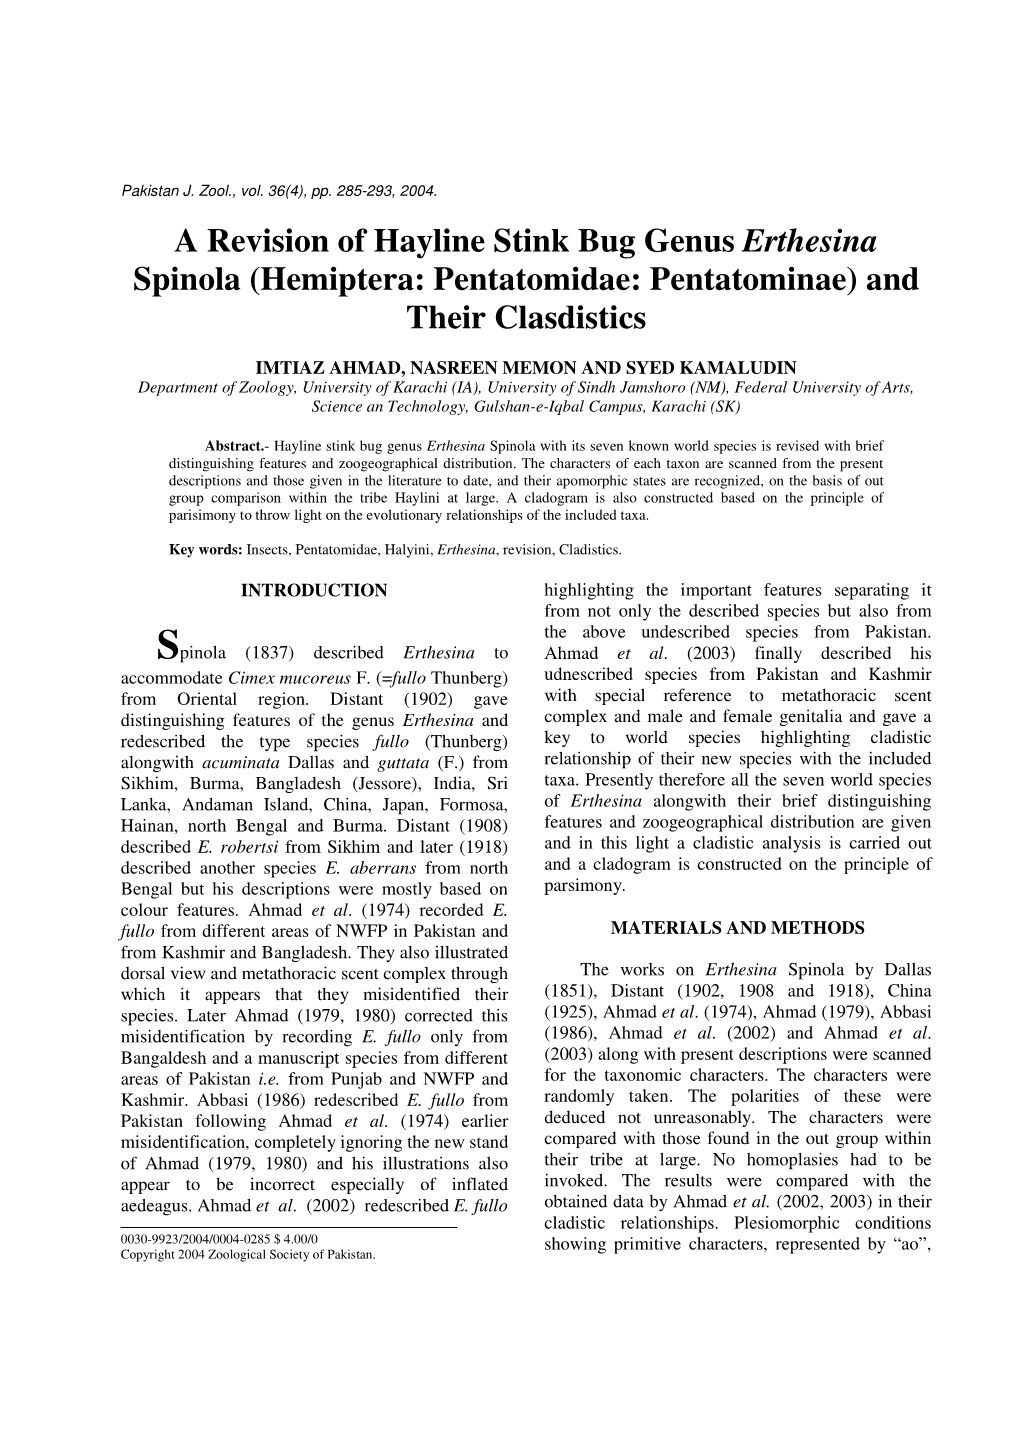 A Revision of Hayline Stink Bug Genus Erthesina Spinola (Hemiptera: Pentatomidae: Pentatominae) and Their Clasdistics